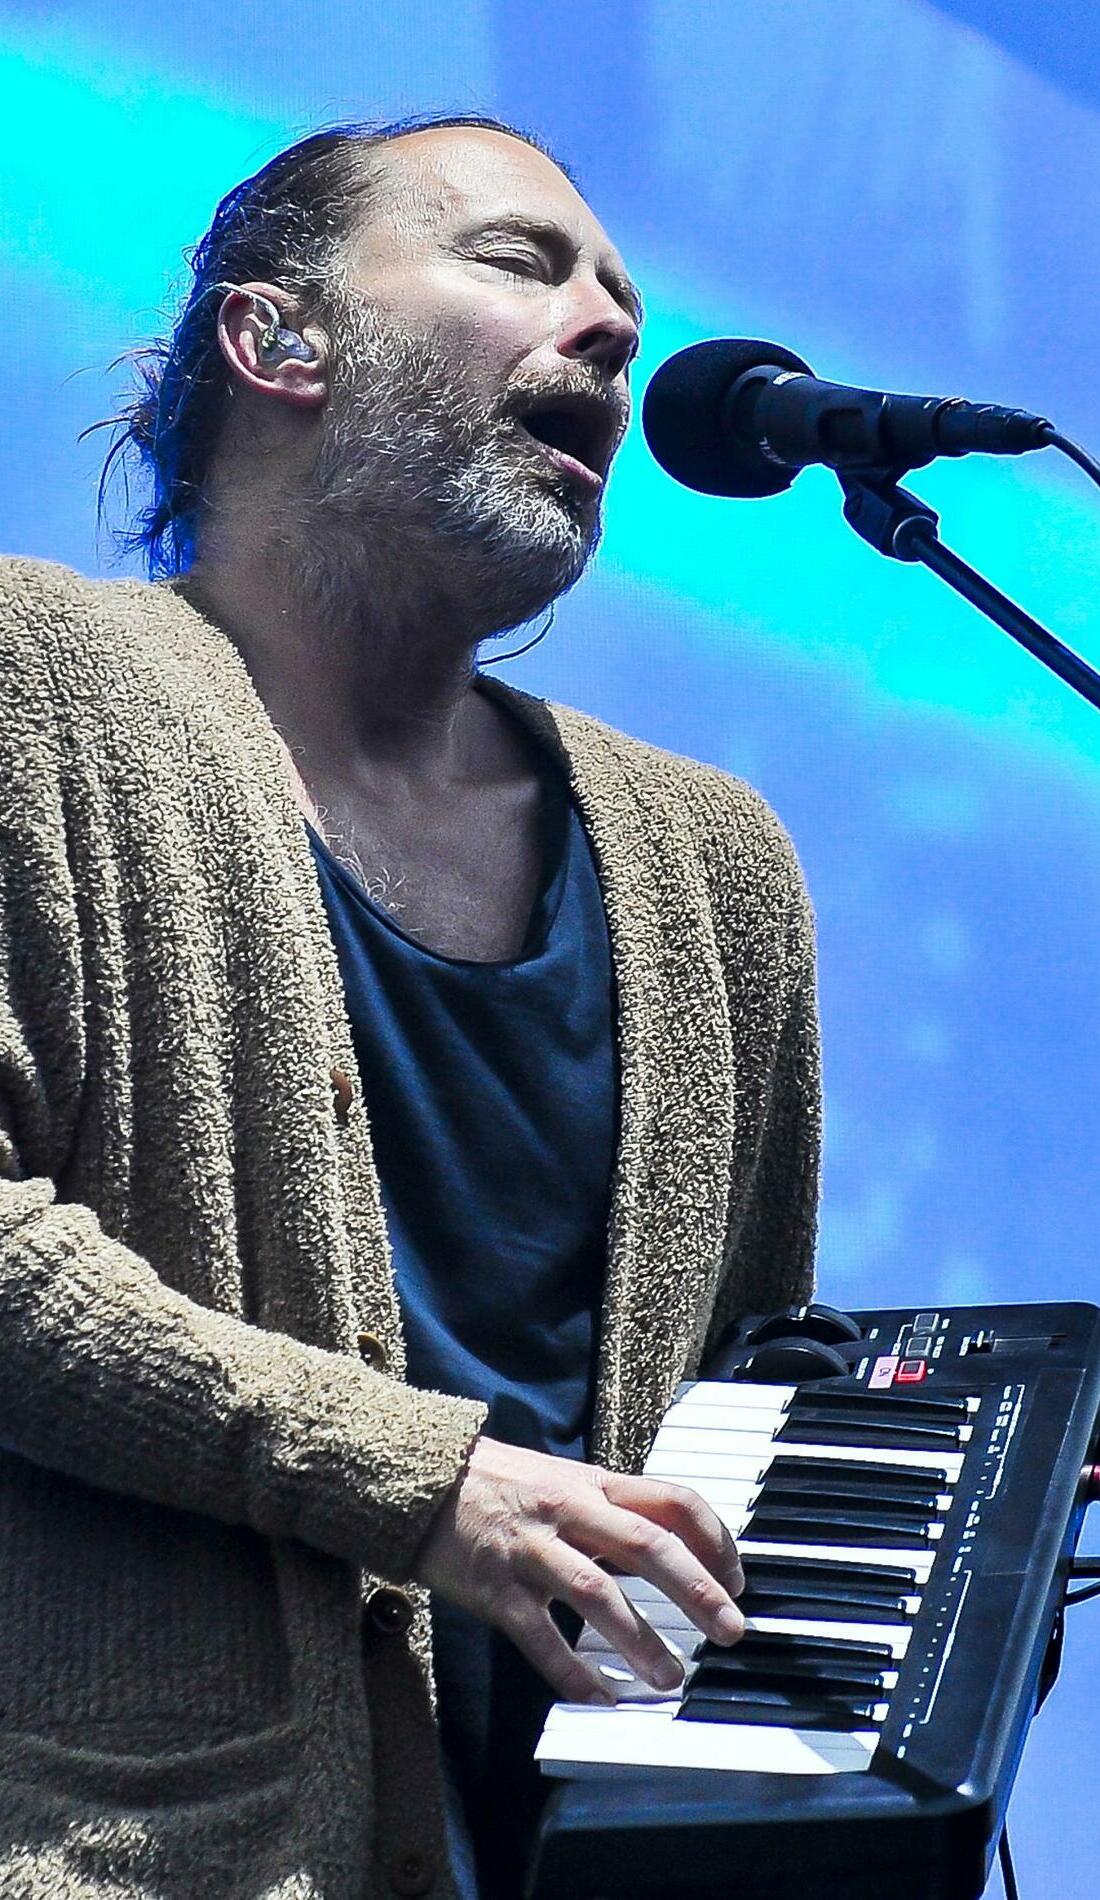 A Radiohead live event